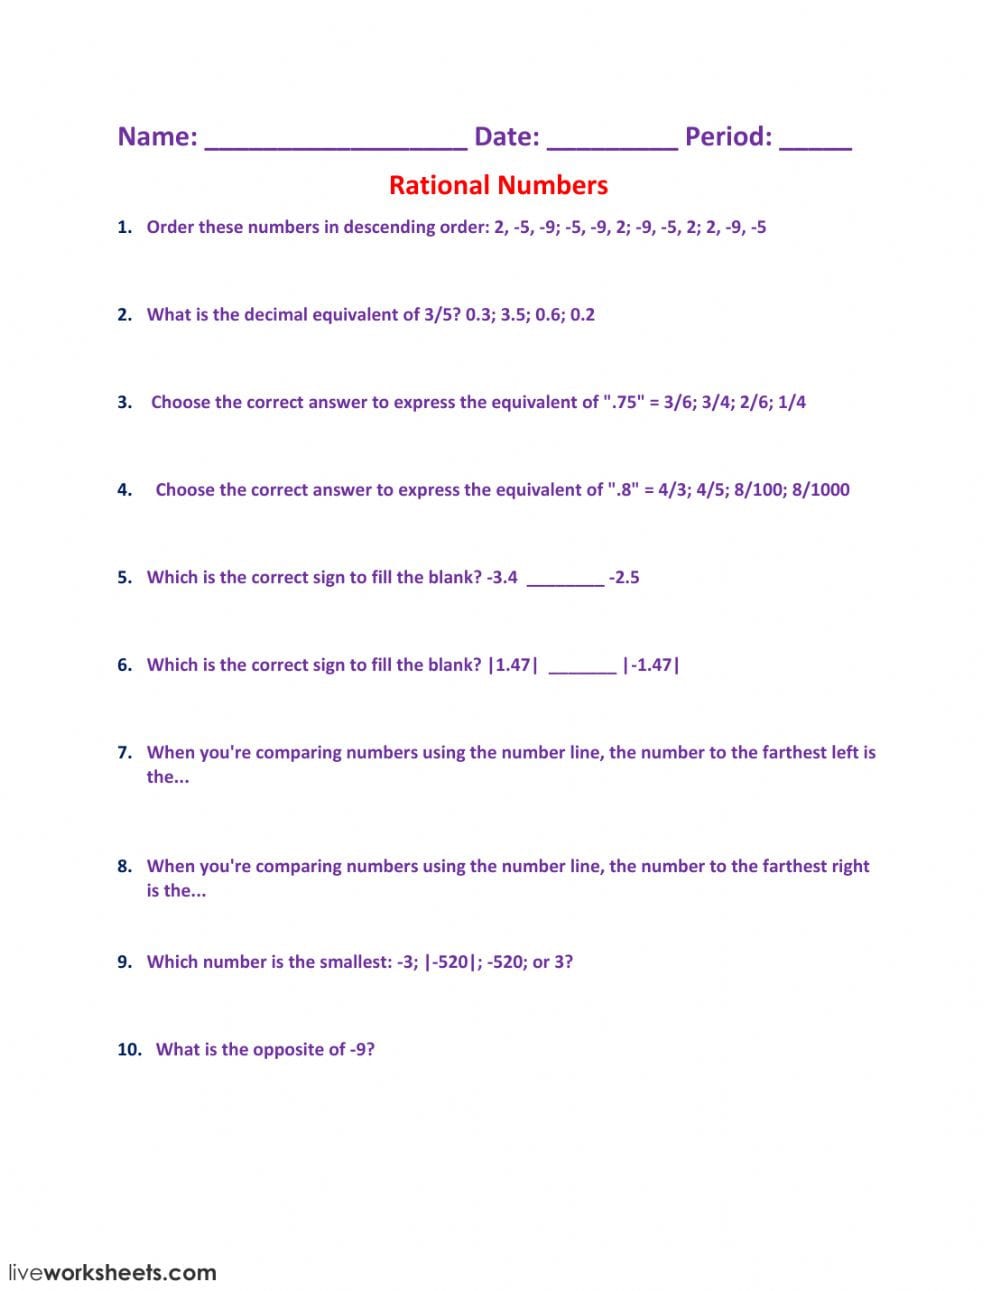 Rational Numbers Interactive Worksheet